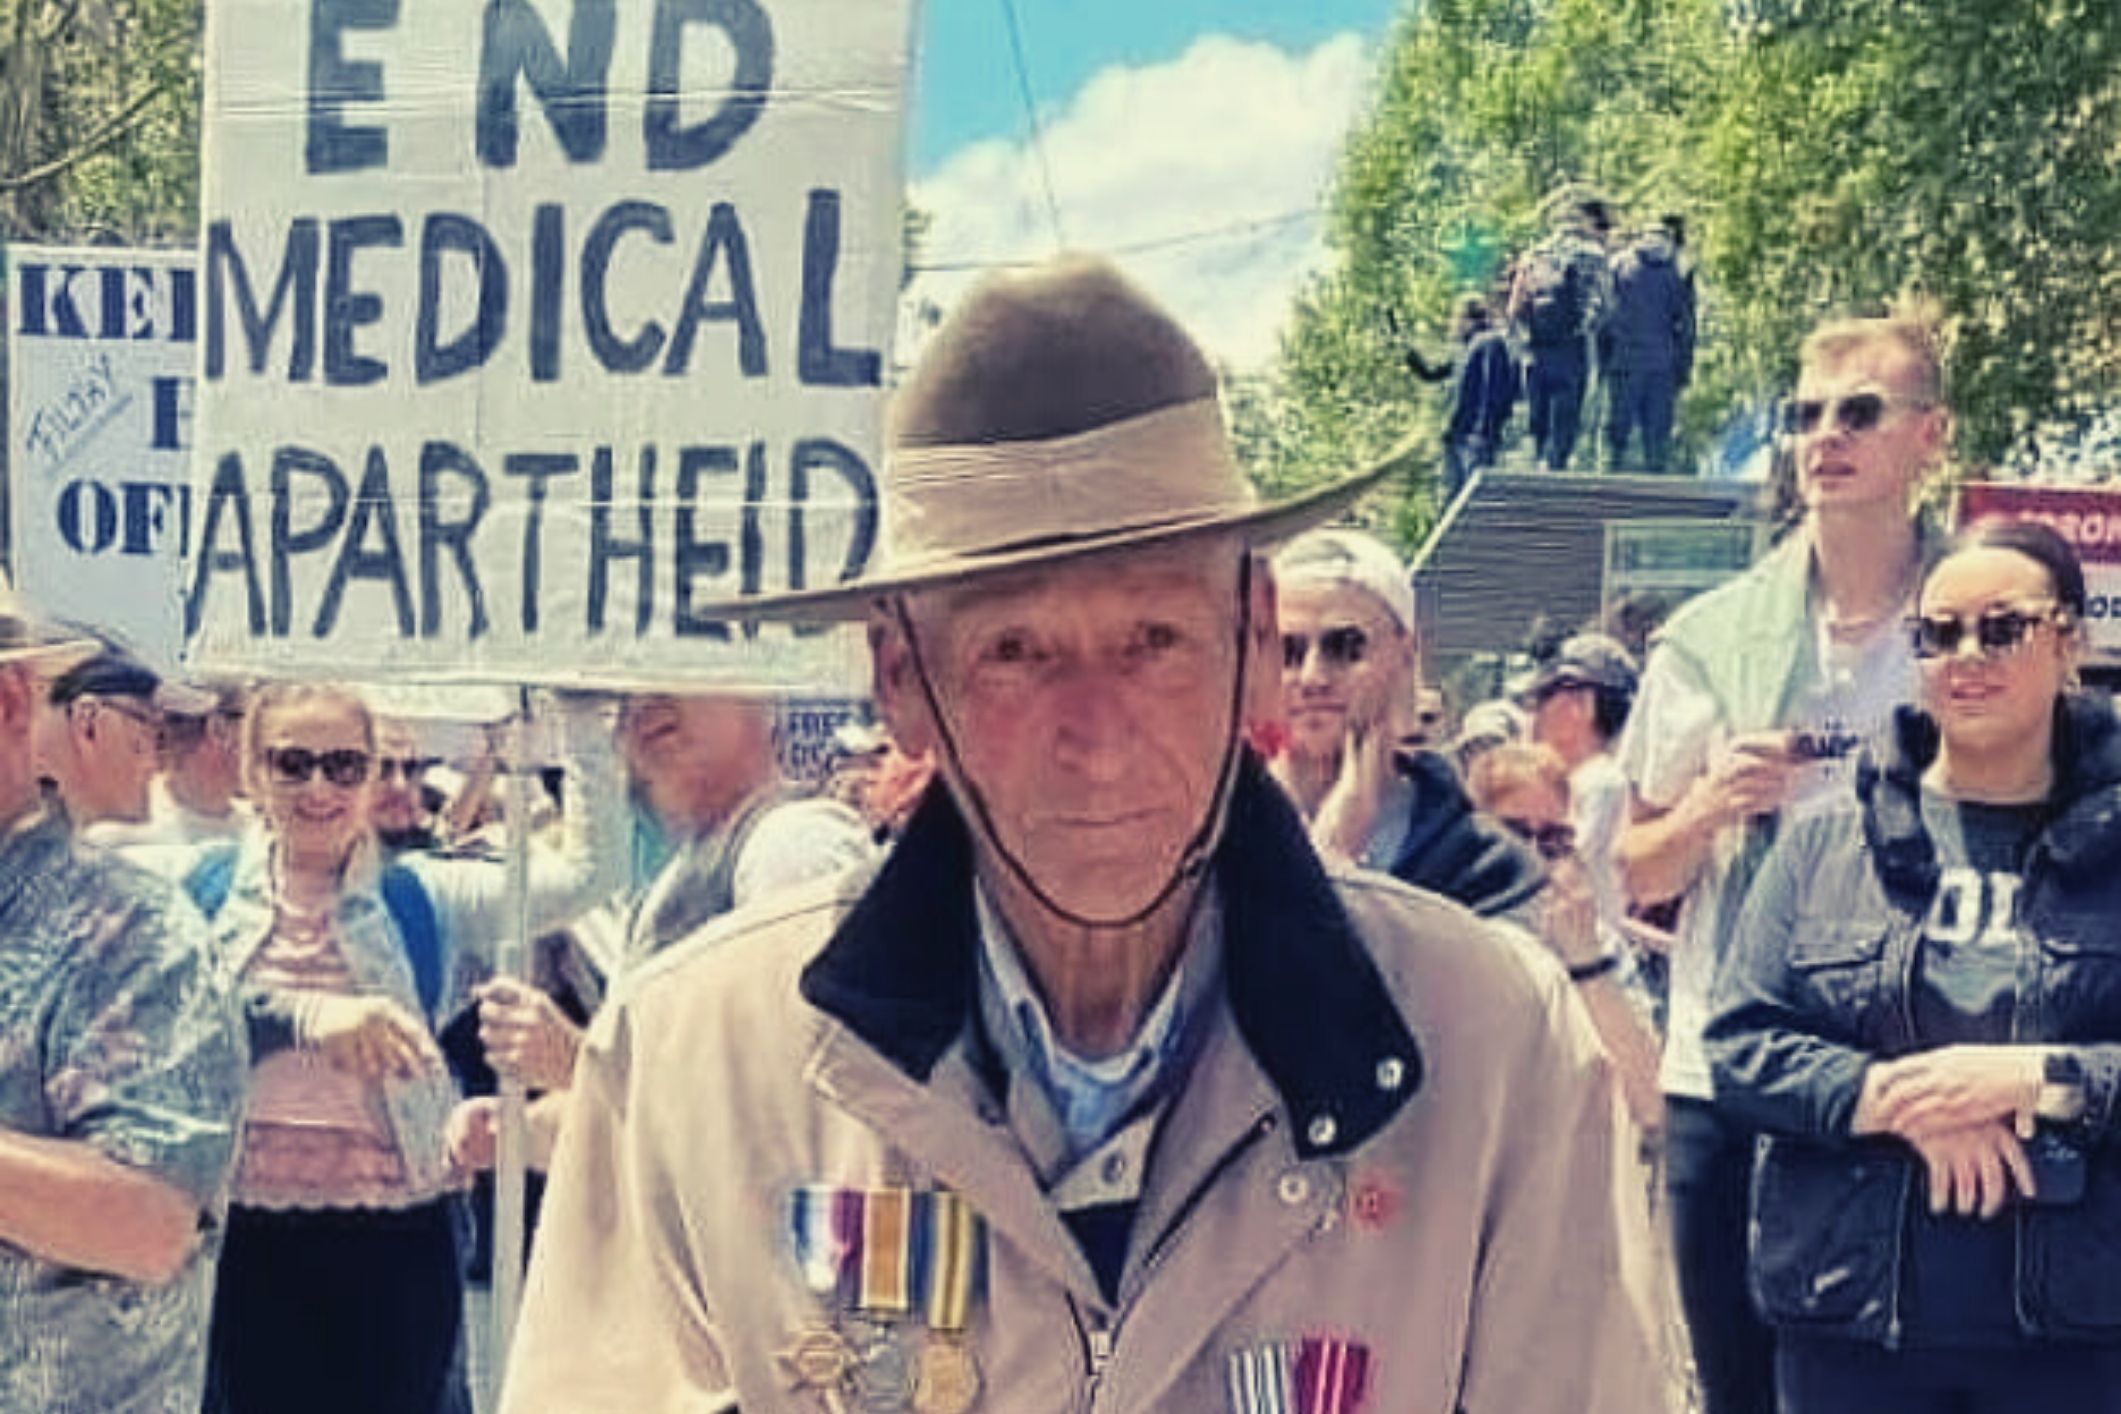 Elderly digger makes emotional plea to end ‘oppressive vaccine mandates in Australia